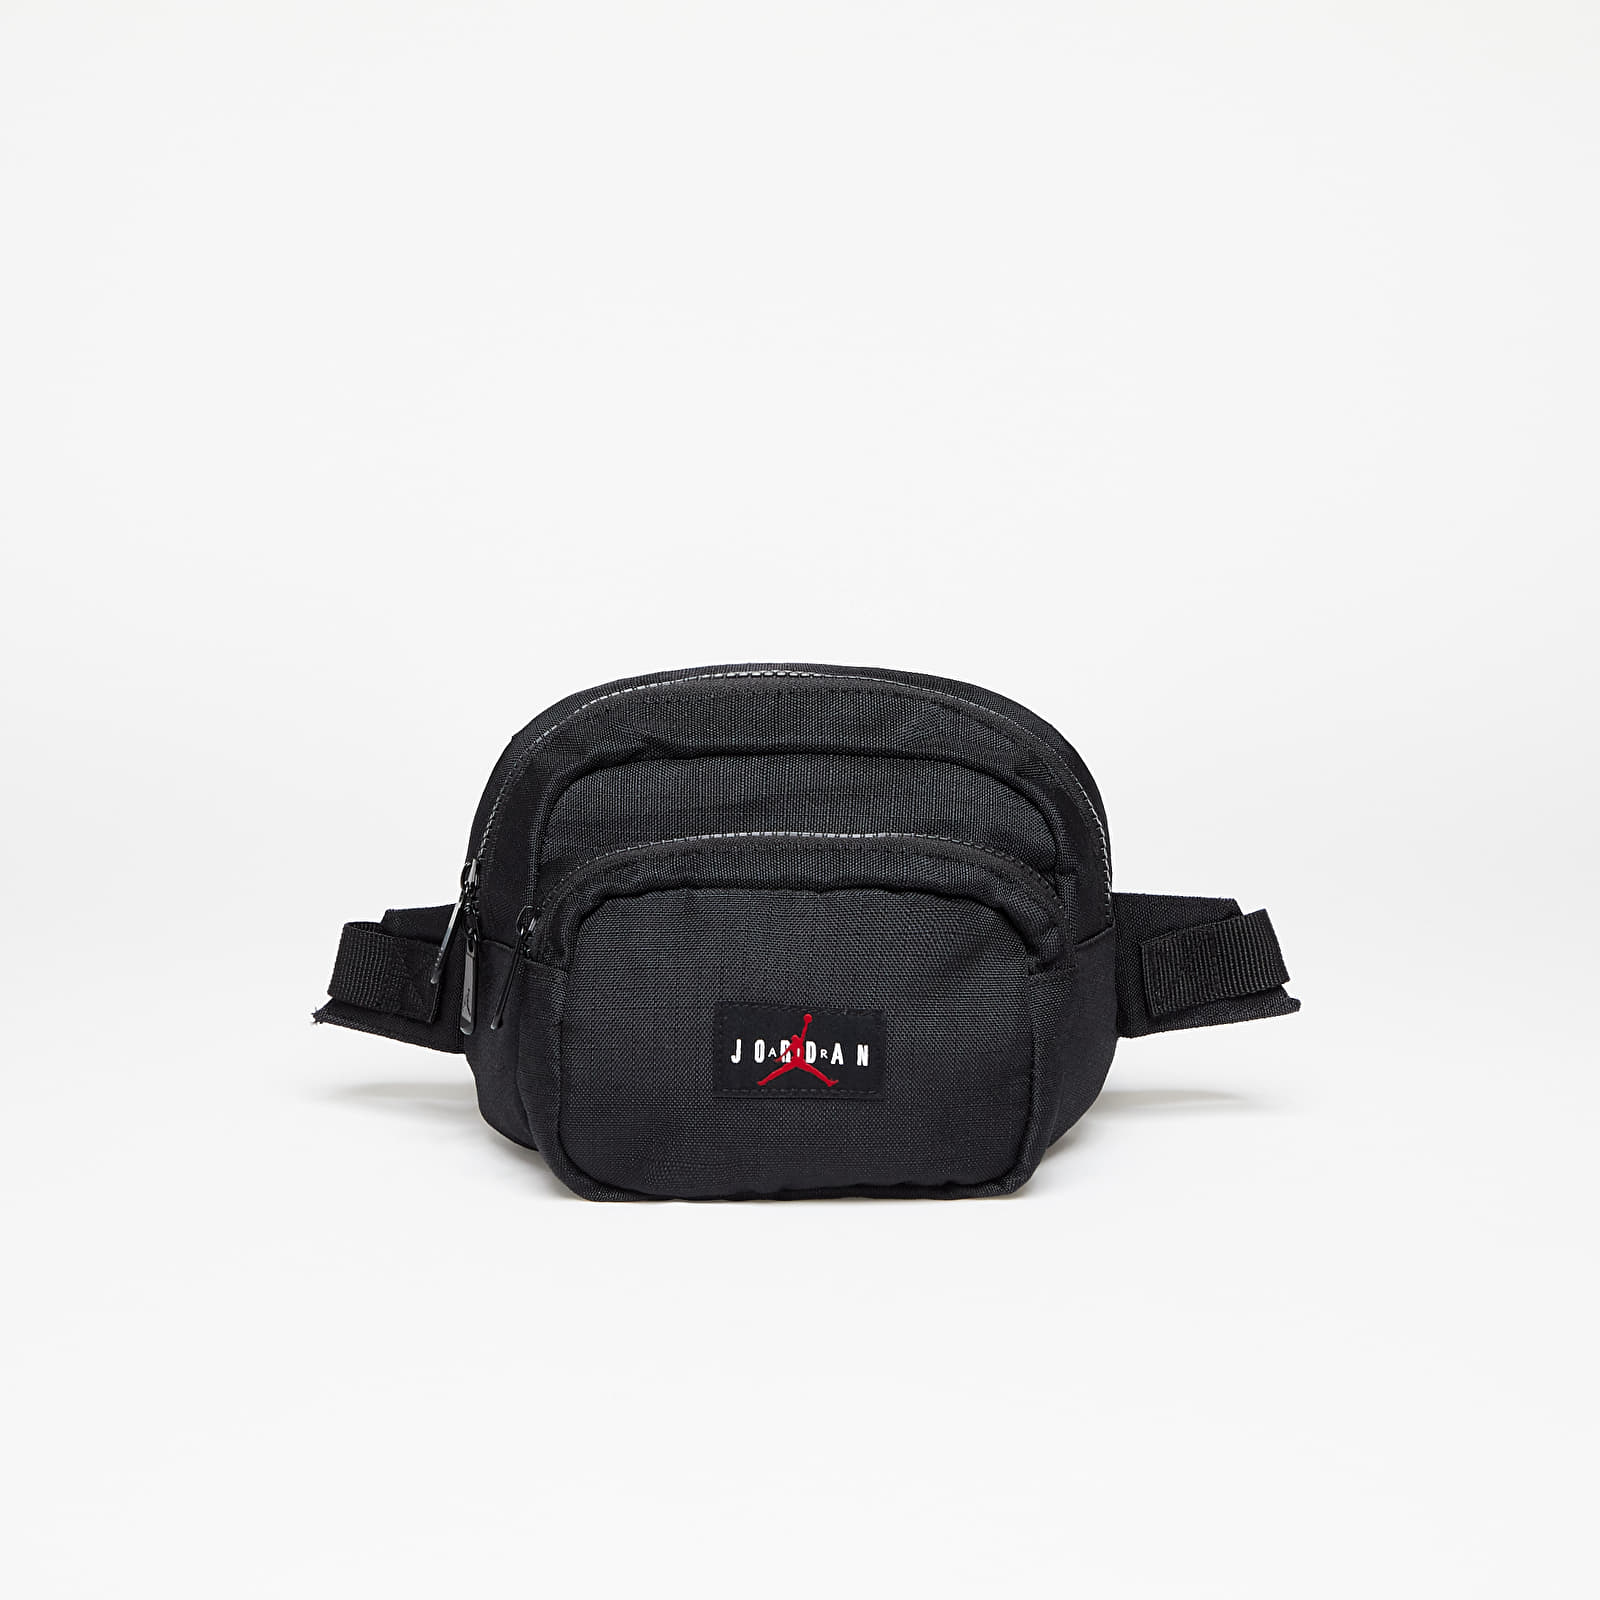 Bags & backpacks Jordan Chest Rig Crossbody Bag "Small" Black